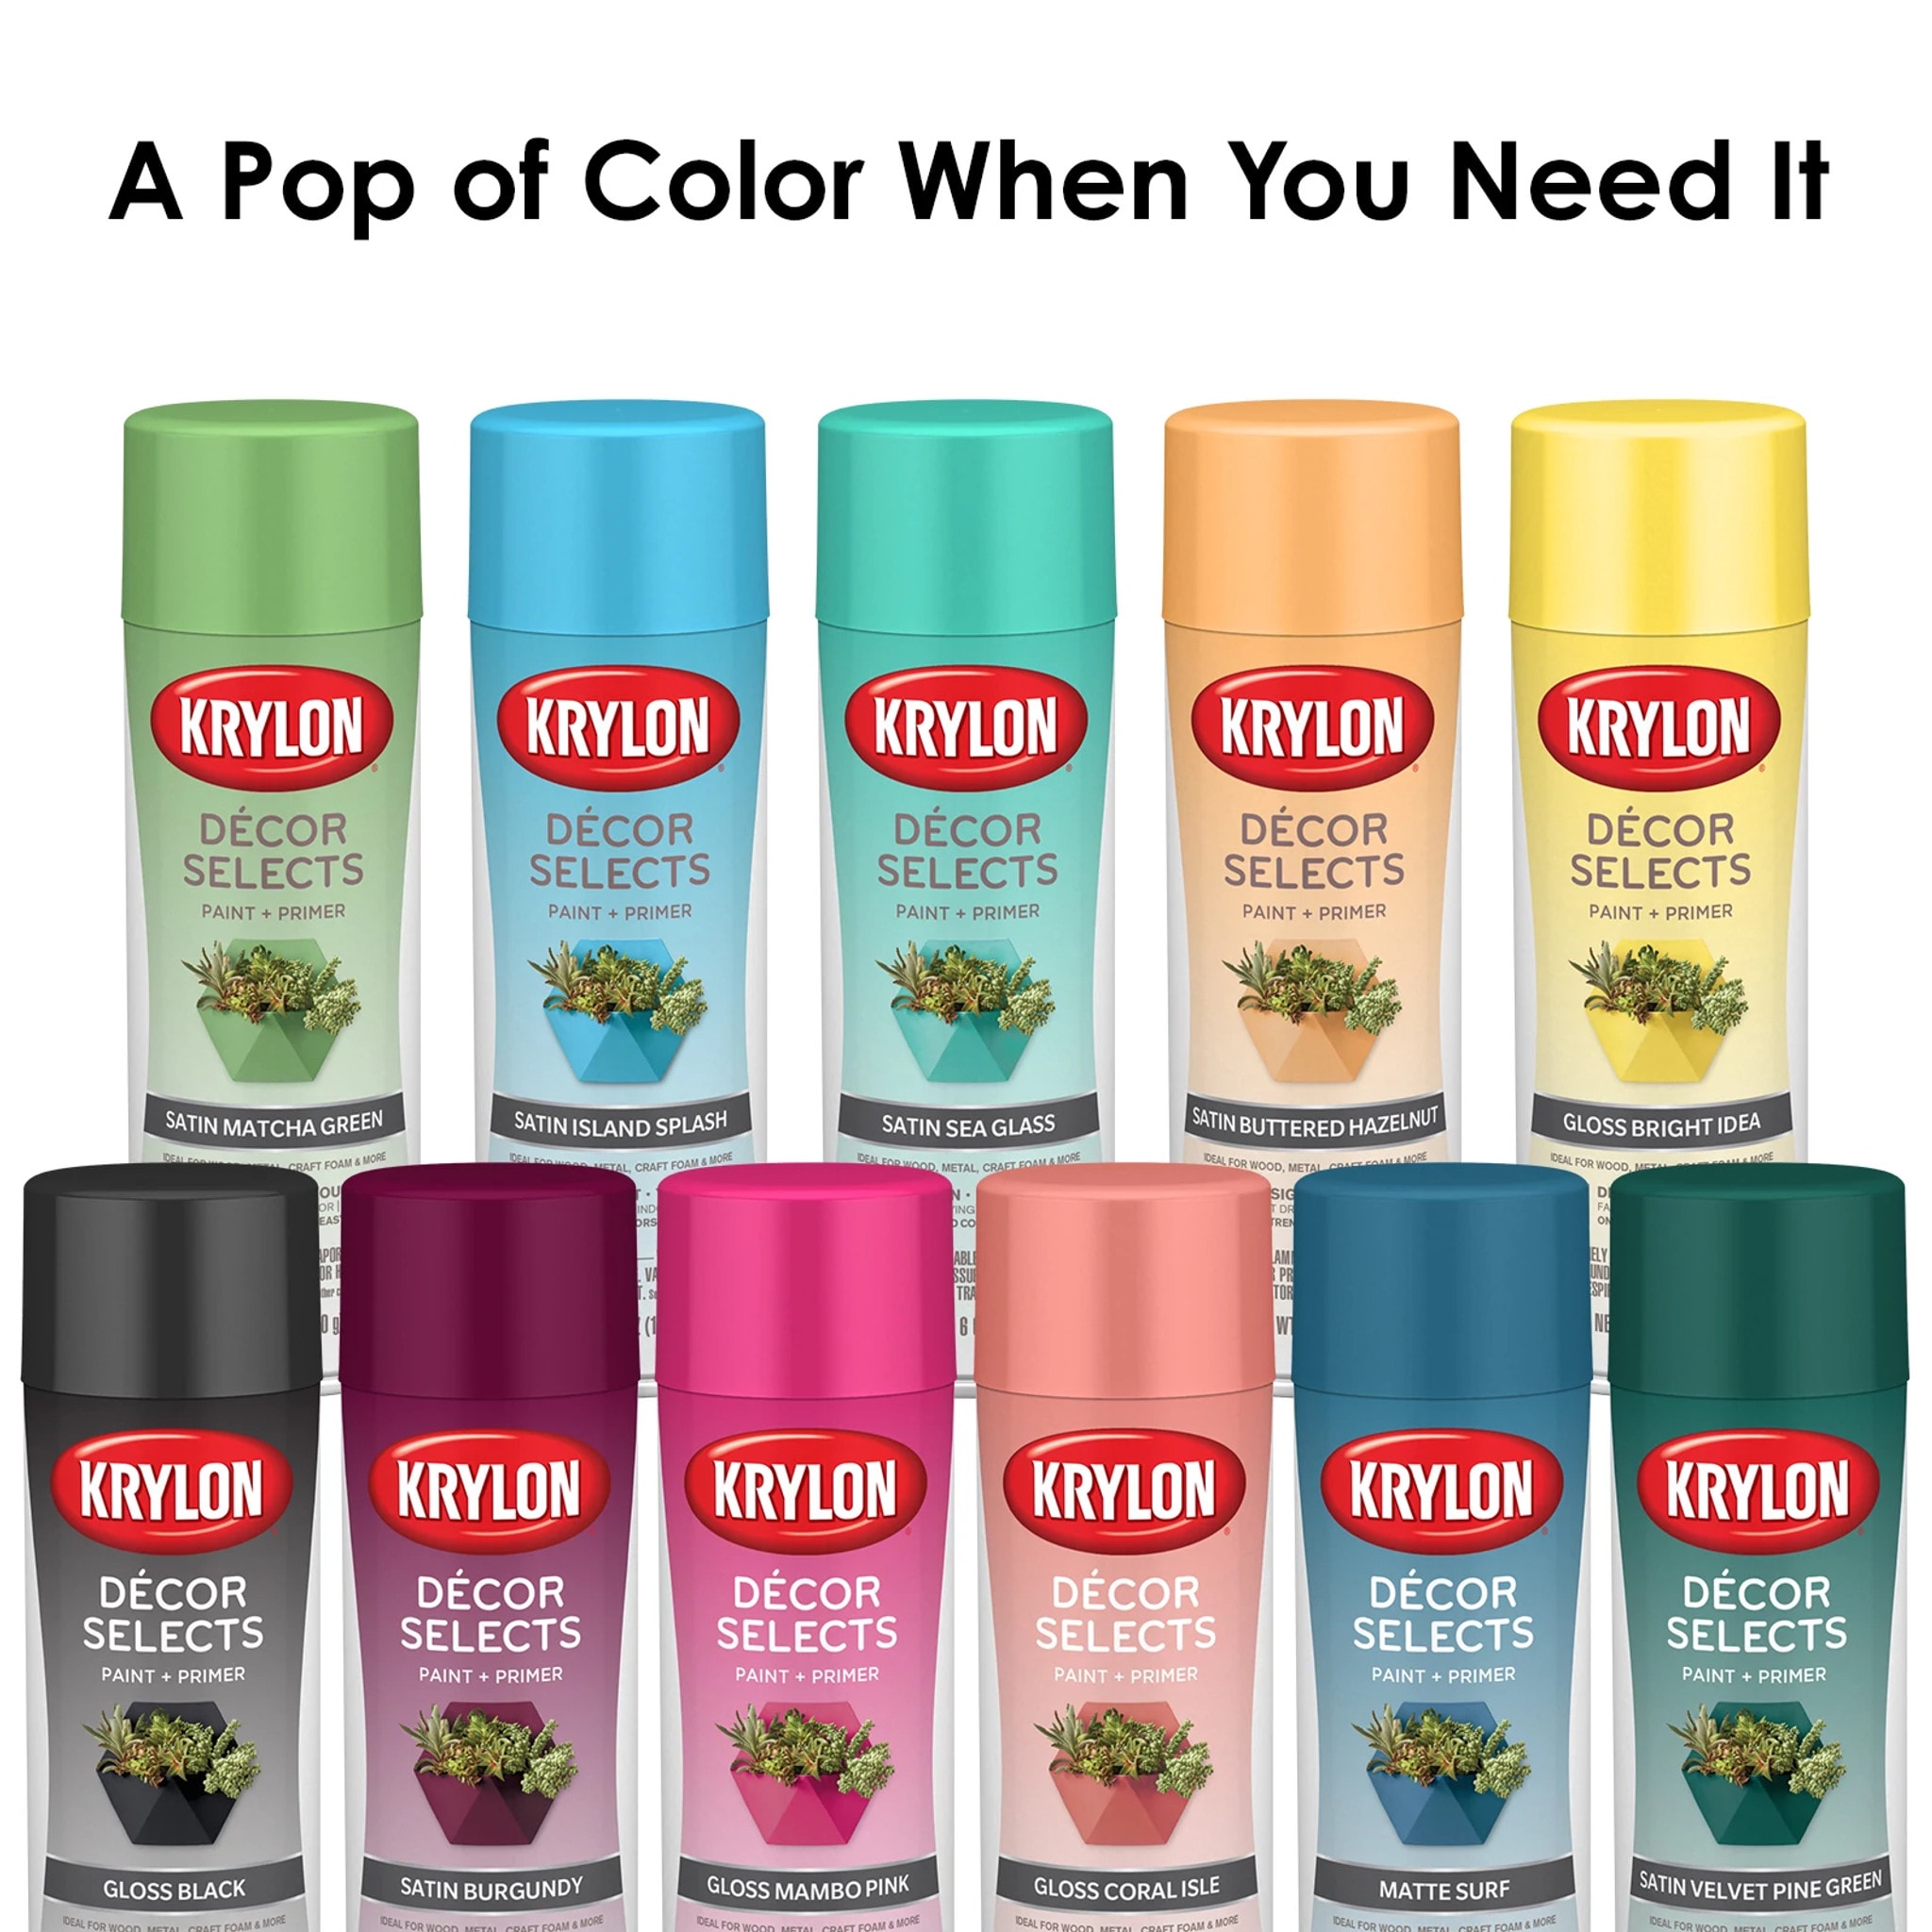 Krylon® Colormaxx Gloss Peekaboo Blue Spray Paint & Primer, 12 oz - Kroger